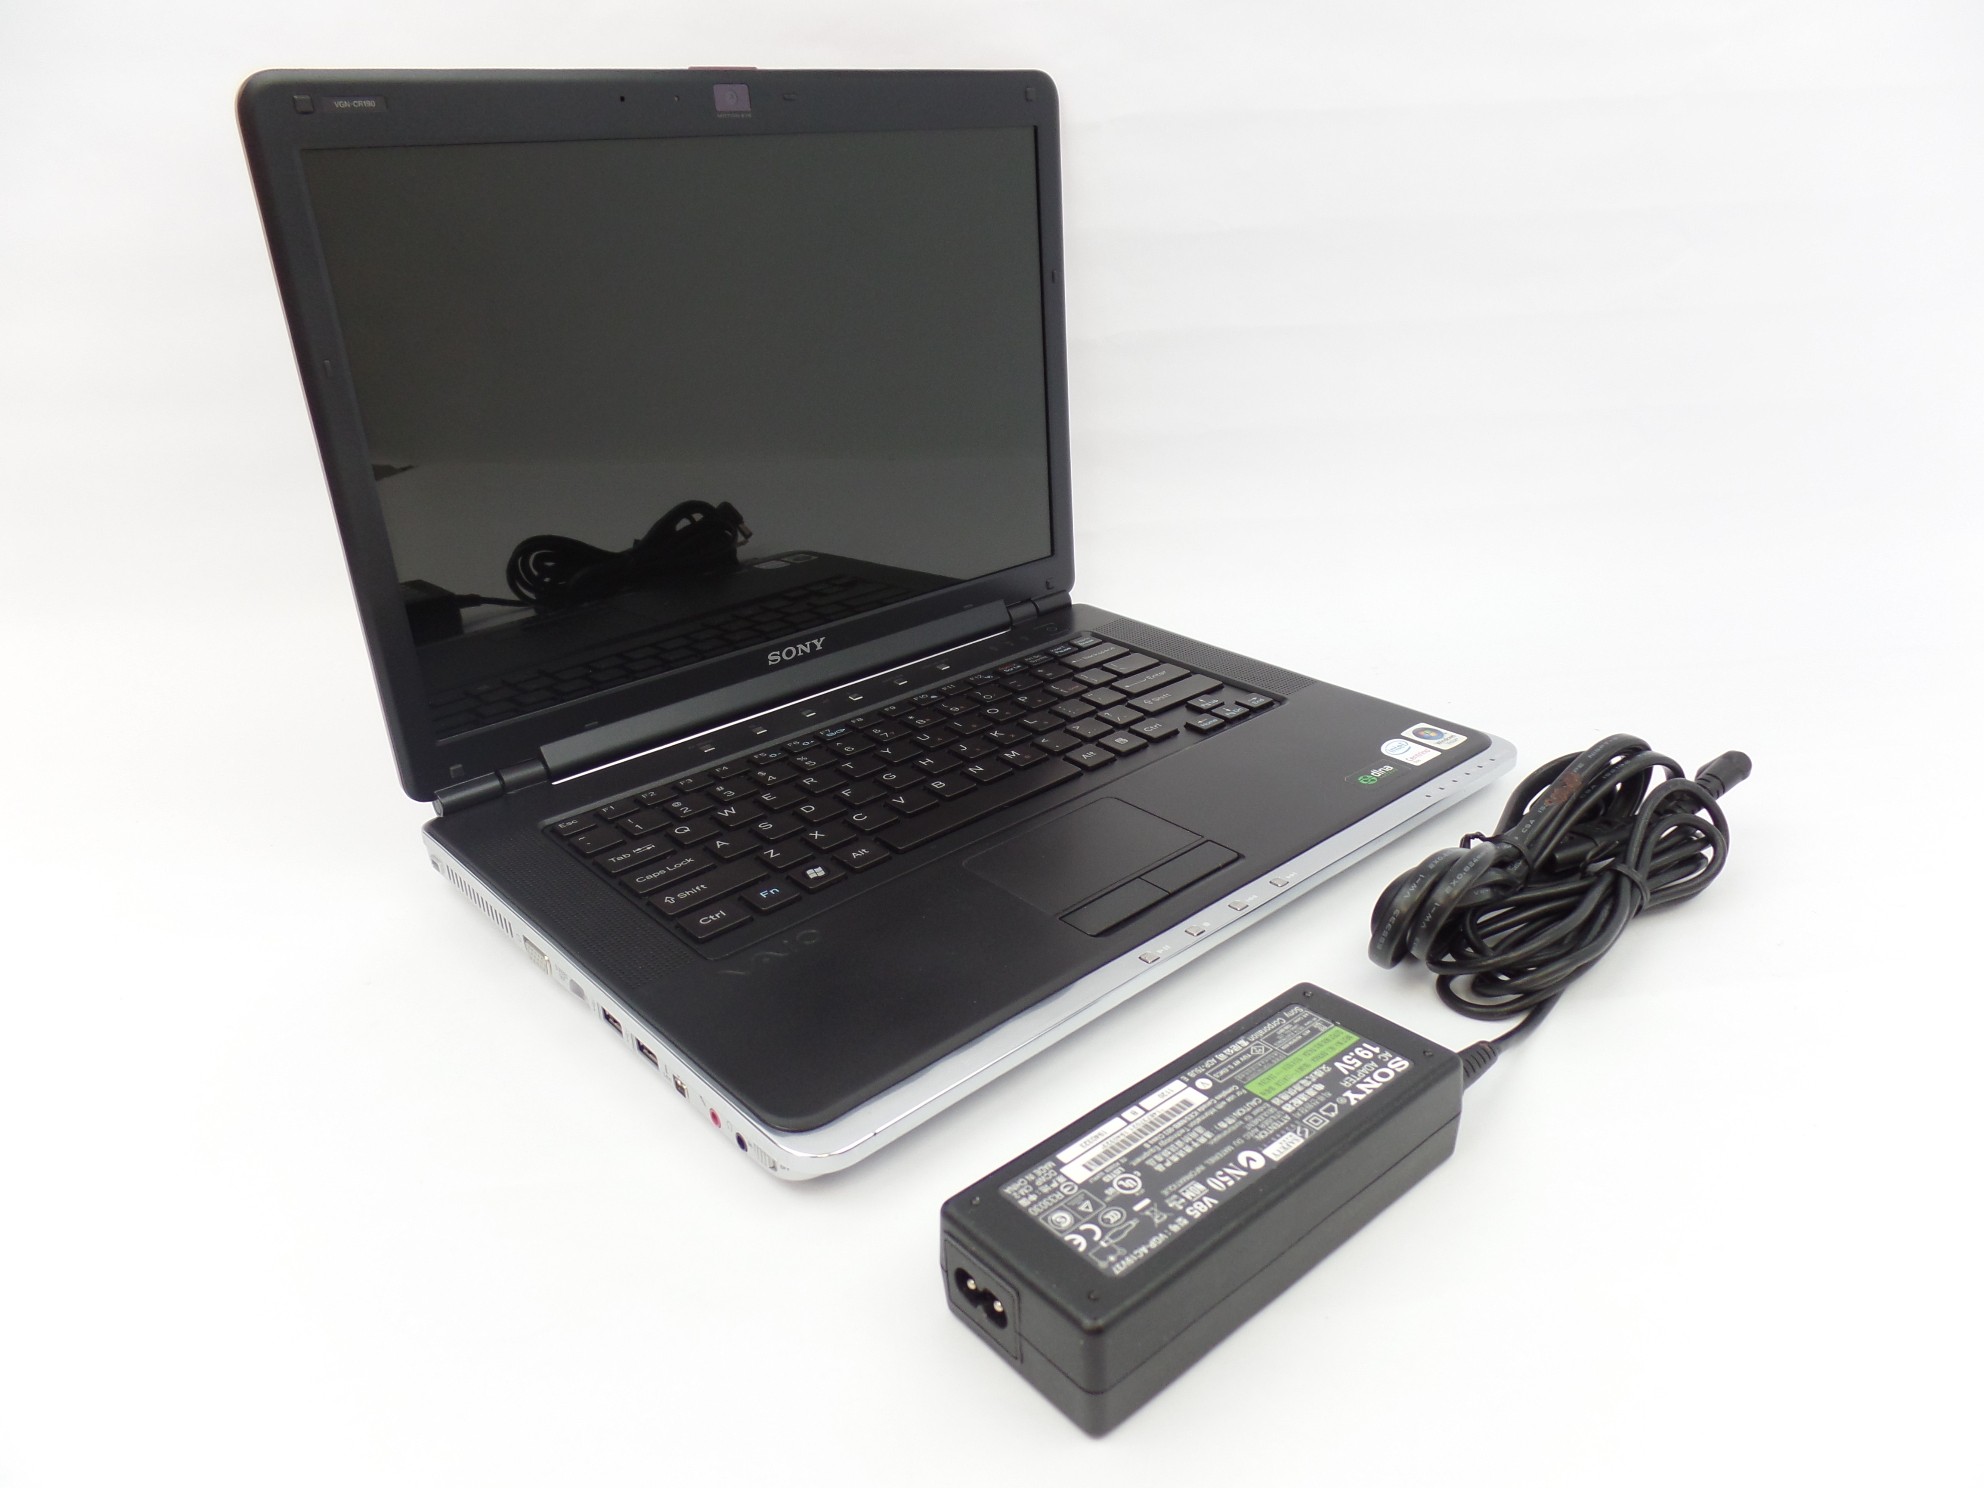 Sony VAIO VGN-CR190 14.1" Core 2 Duo T7100 1.8GHz 3GB 200GB PCG-5G2L Red Laptop